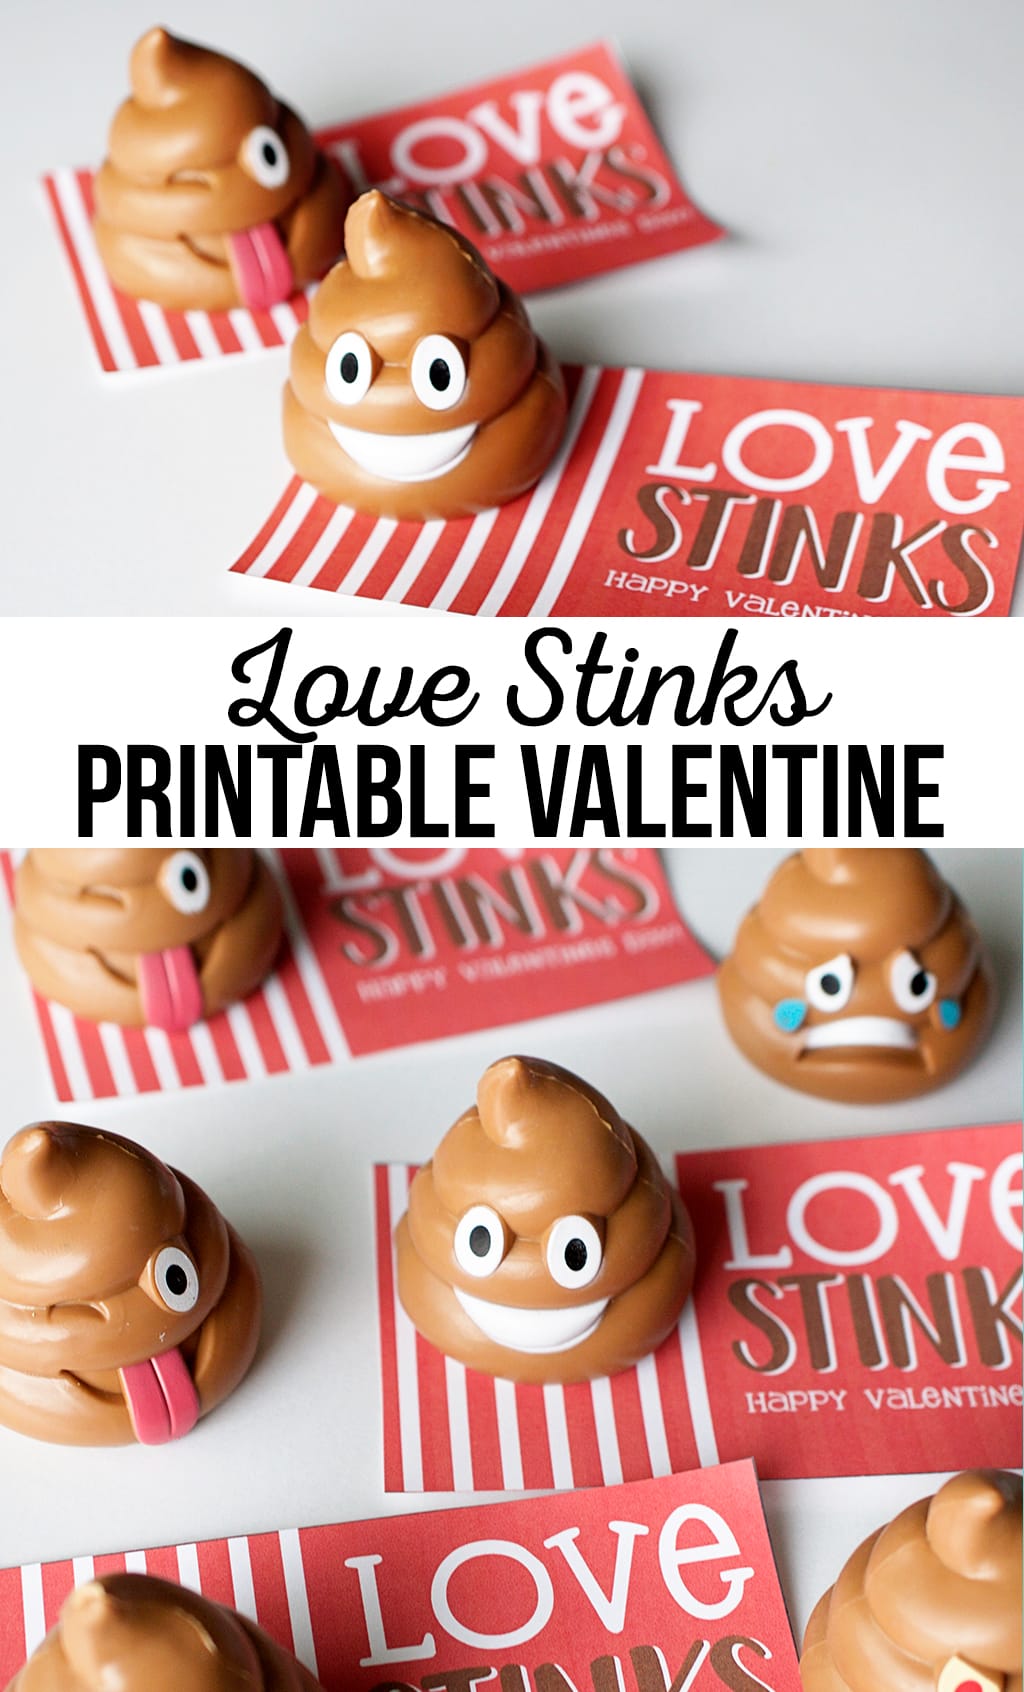 Love stinks printable Valentine